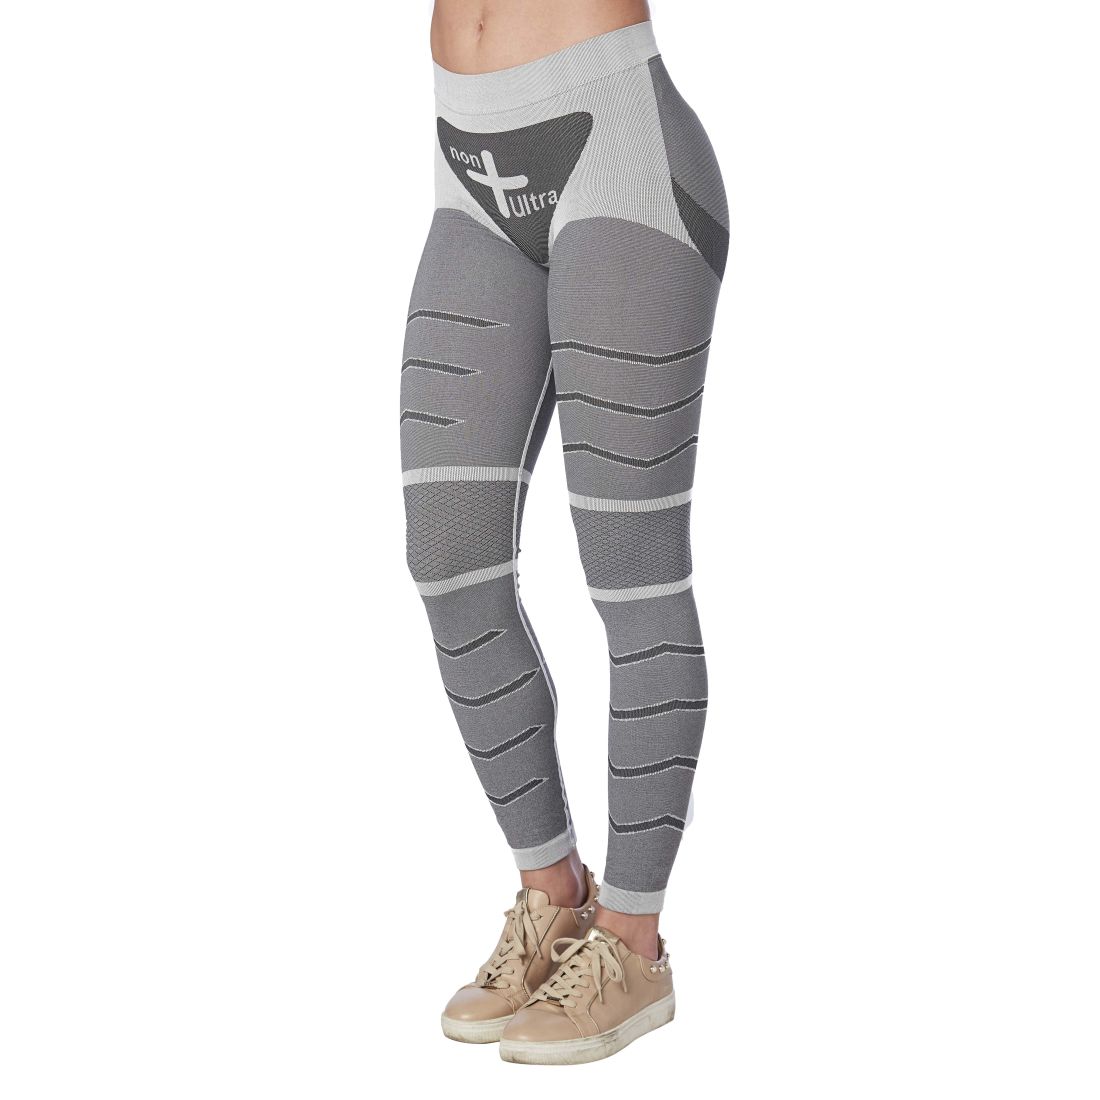 https://www.cizeta.it/open2b/var/products/1/75/0-fc3e696e-1100-Unisex-thermal-sportwear-leggings-with-emana-+Dryarn-fibre.jpg